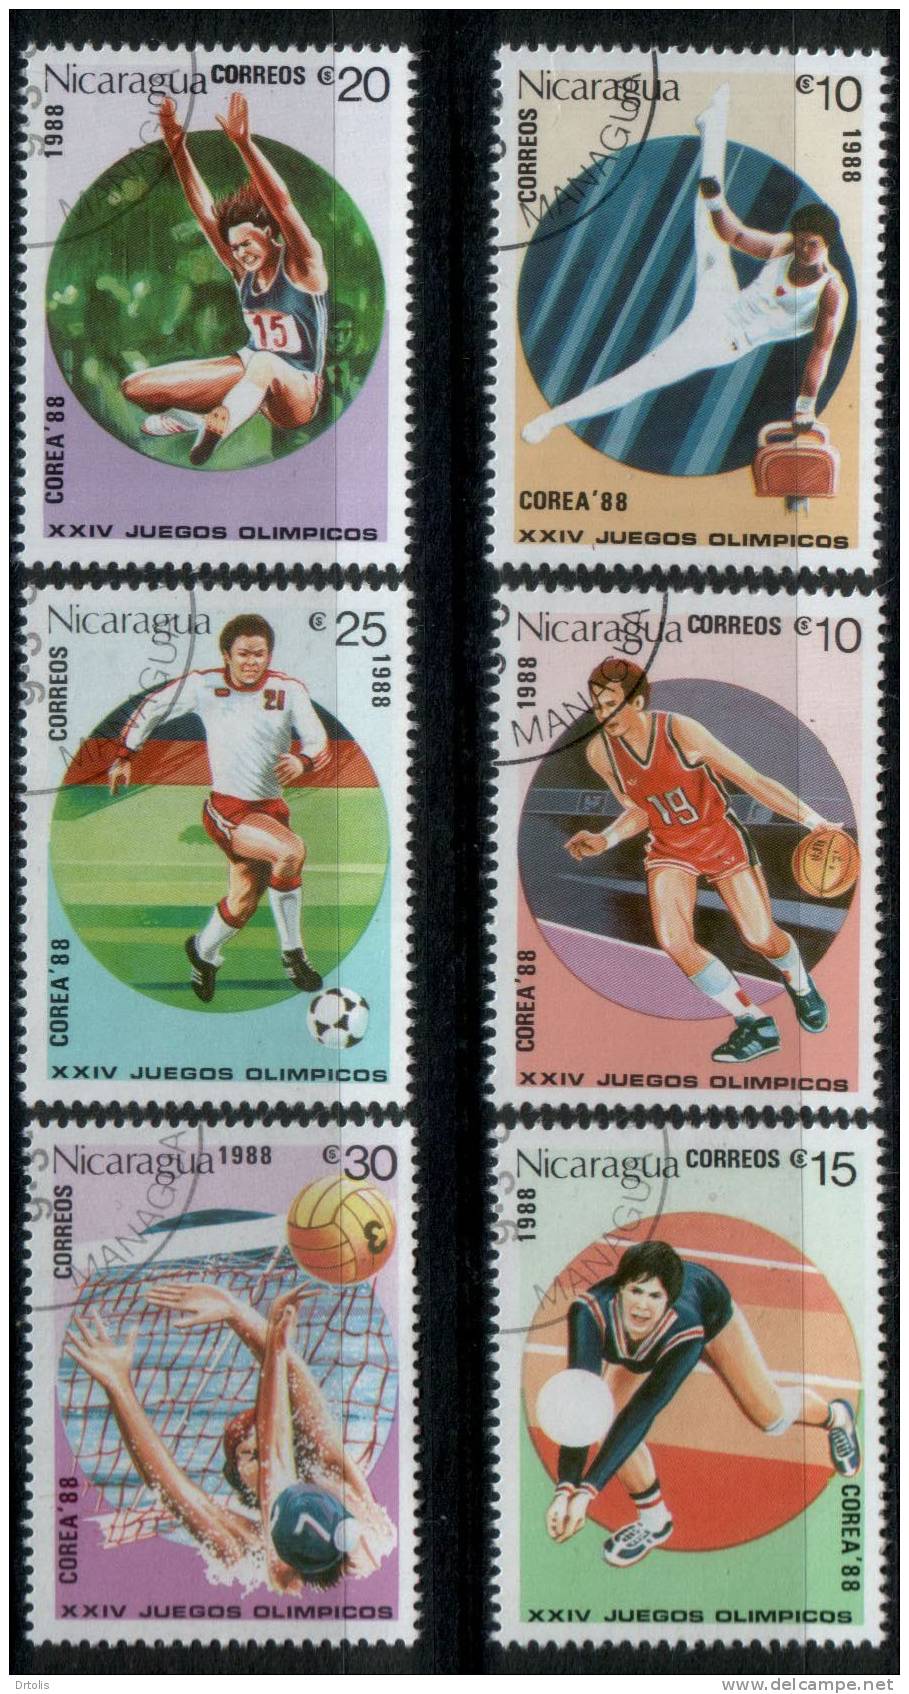 NICARAGUA / SEOUL 88 / GYMNASTICS;BASKETBALL;VOL LEYBALL;LONG JUMP;SOCCER;WATER POLO/ VF/ 2 SCANS - Summer 1988: Seoul